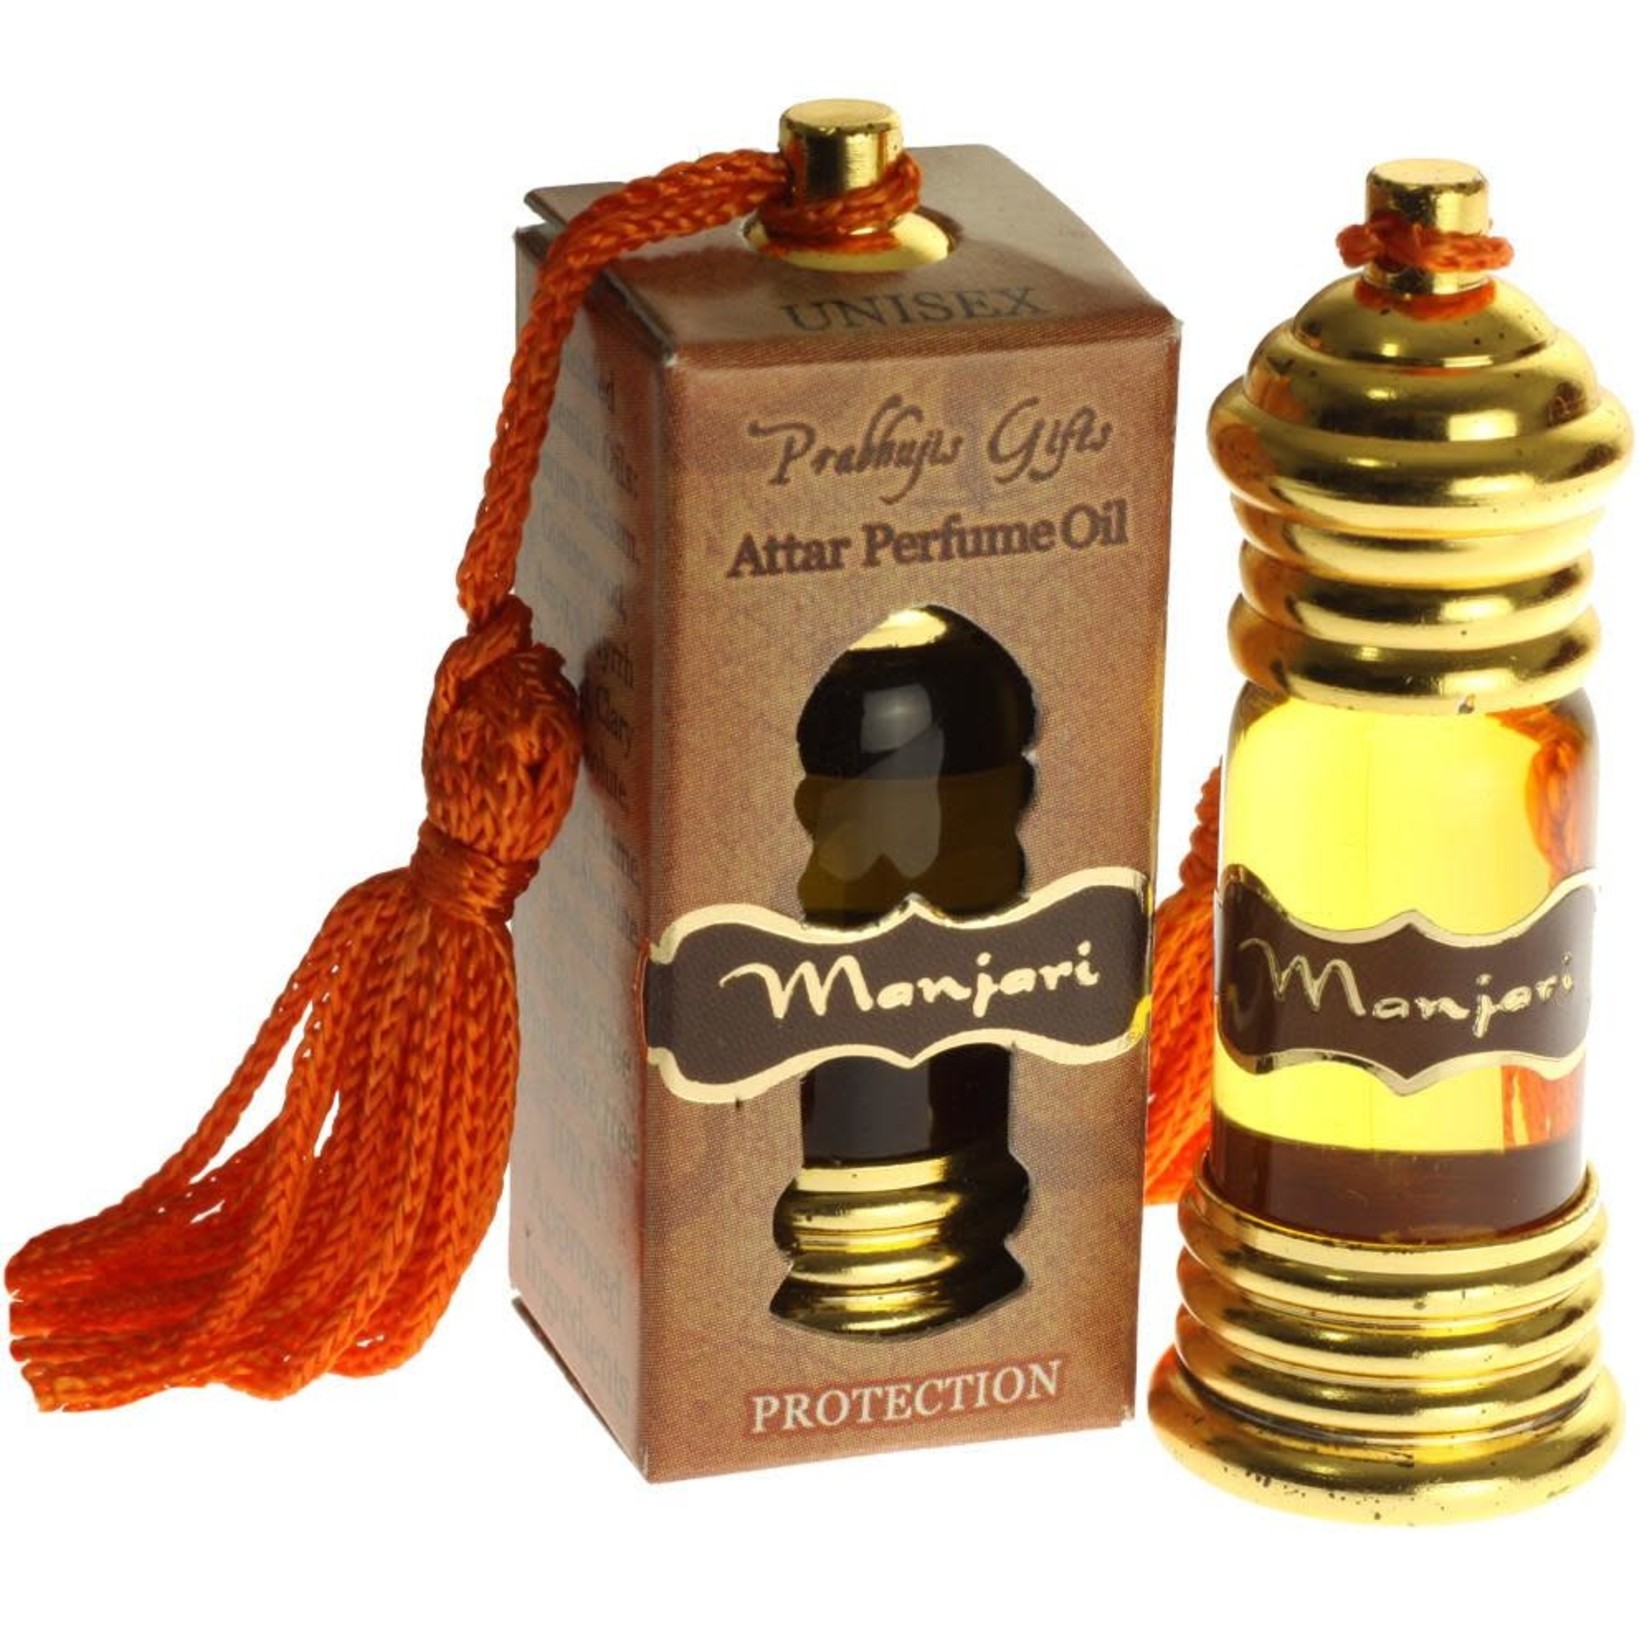 Prabhujis Gifts Perfume Attar Oil Manjari for Protection